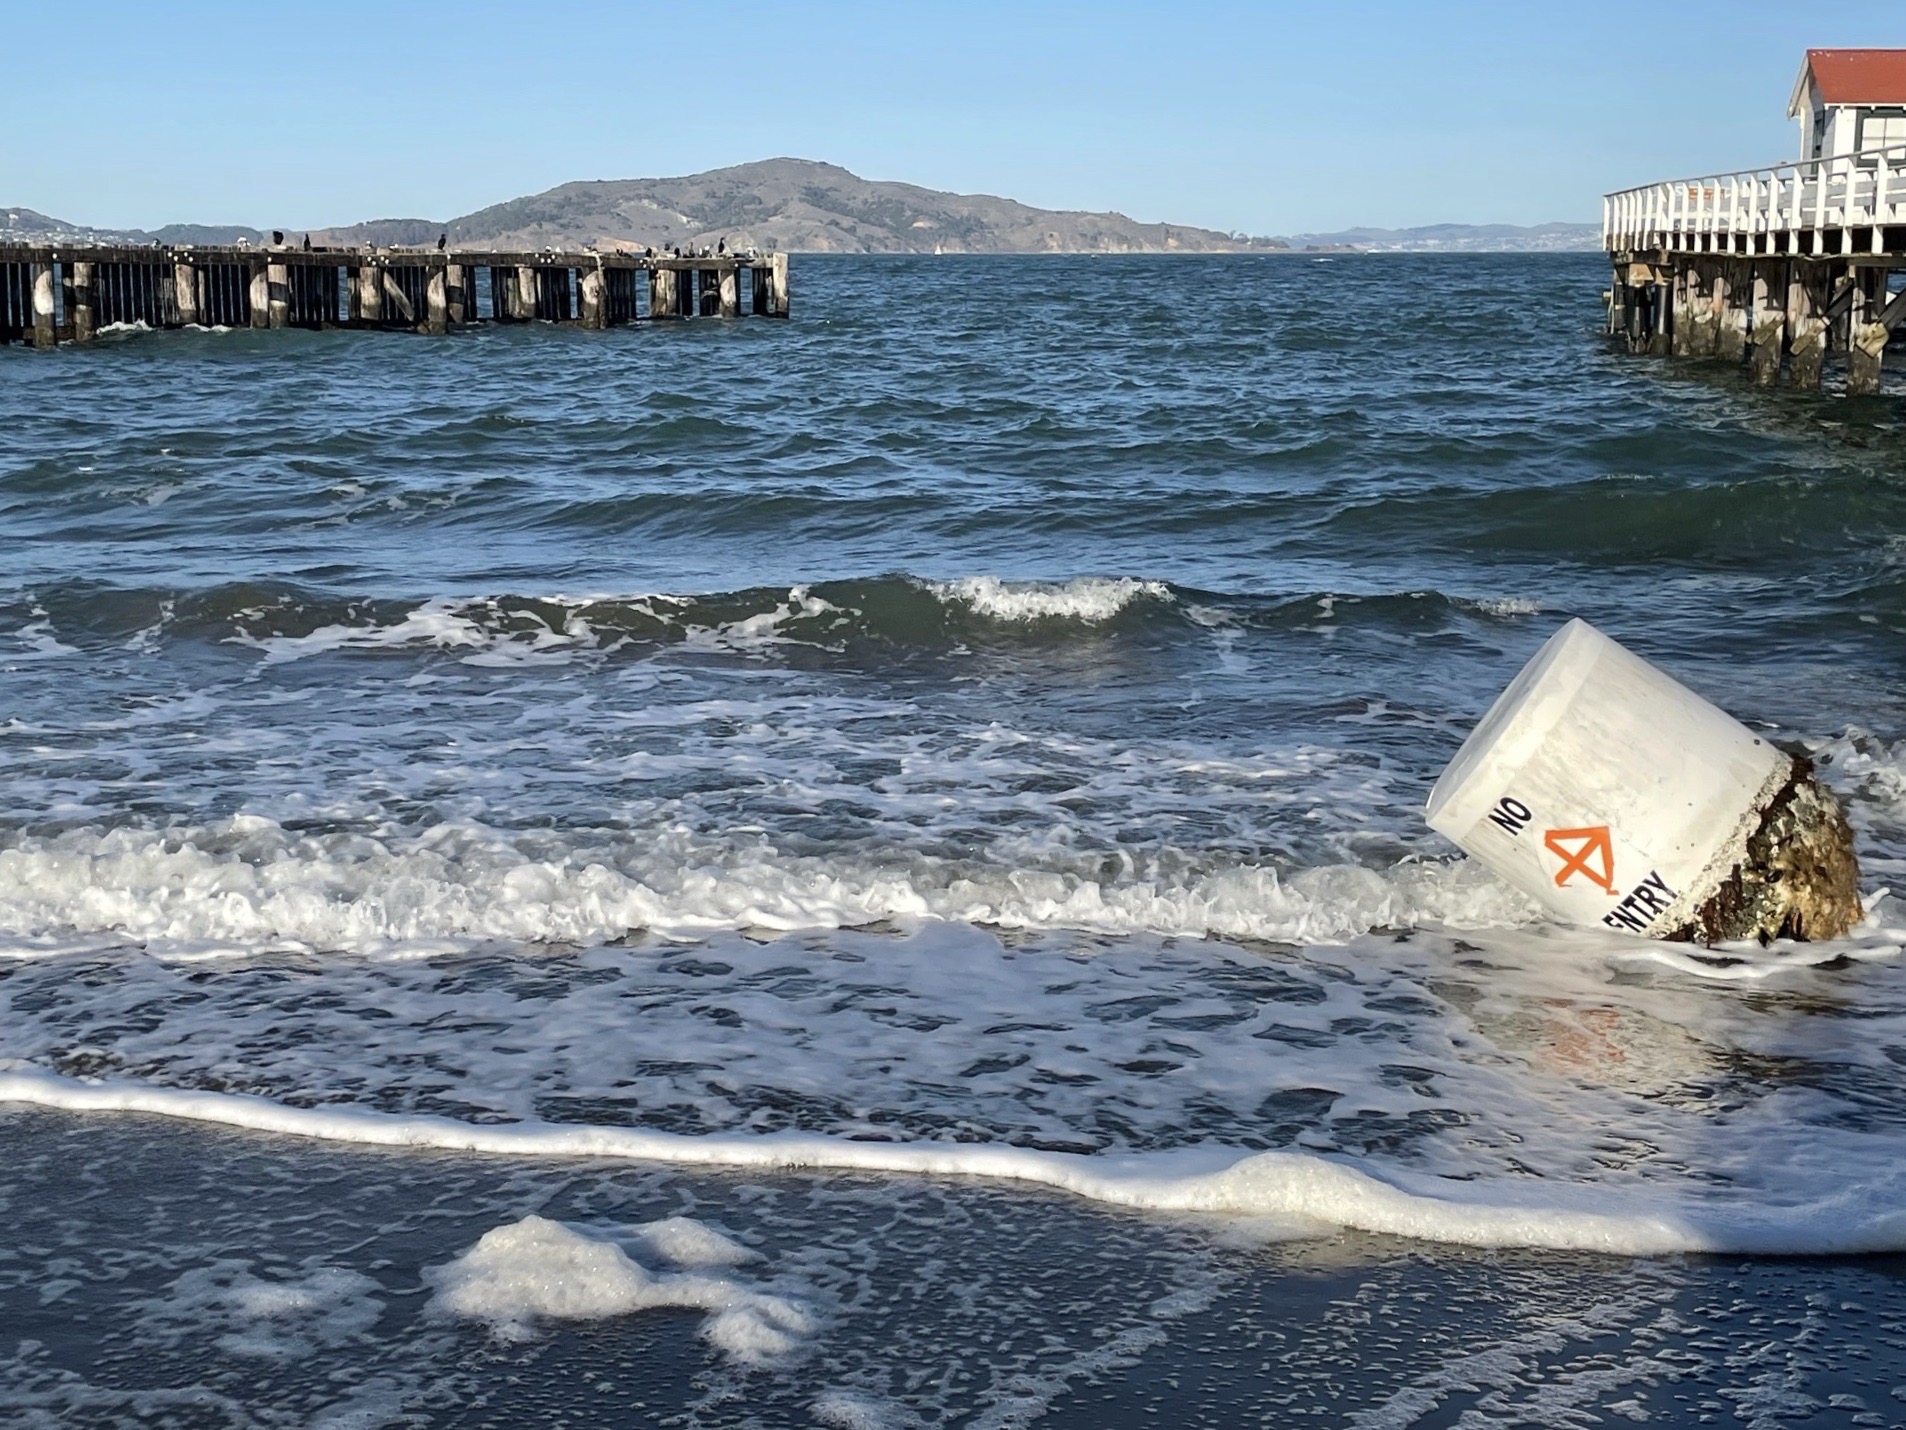 No Entry Allowed on San Francisco Bay